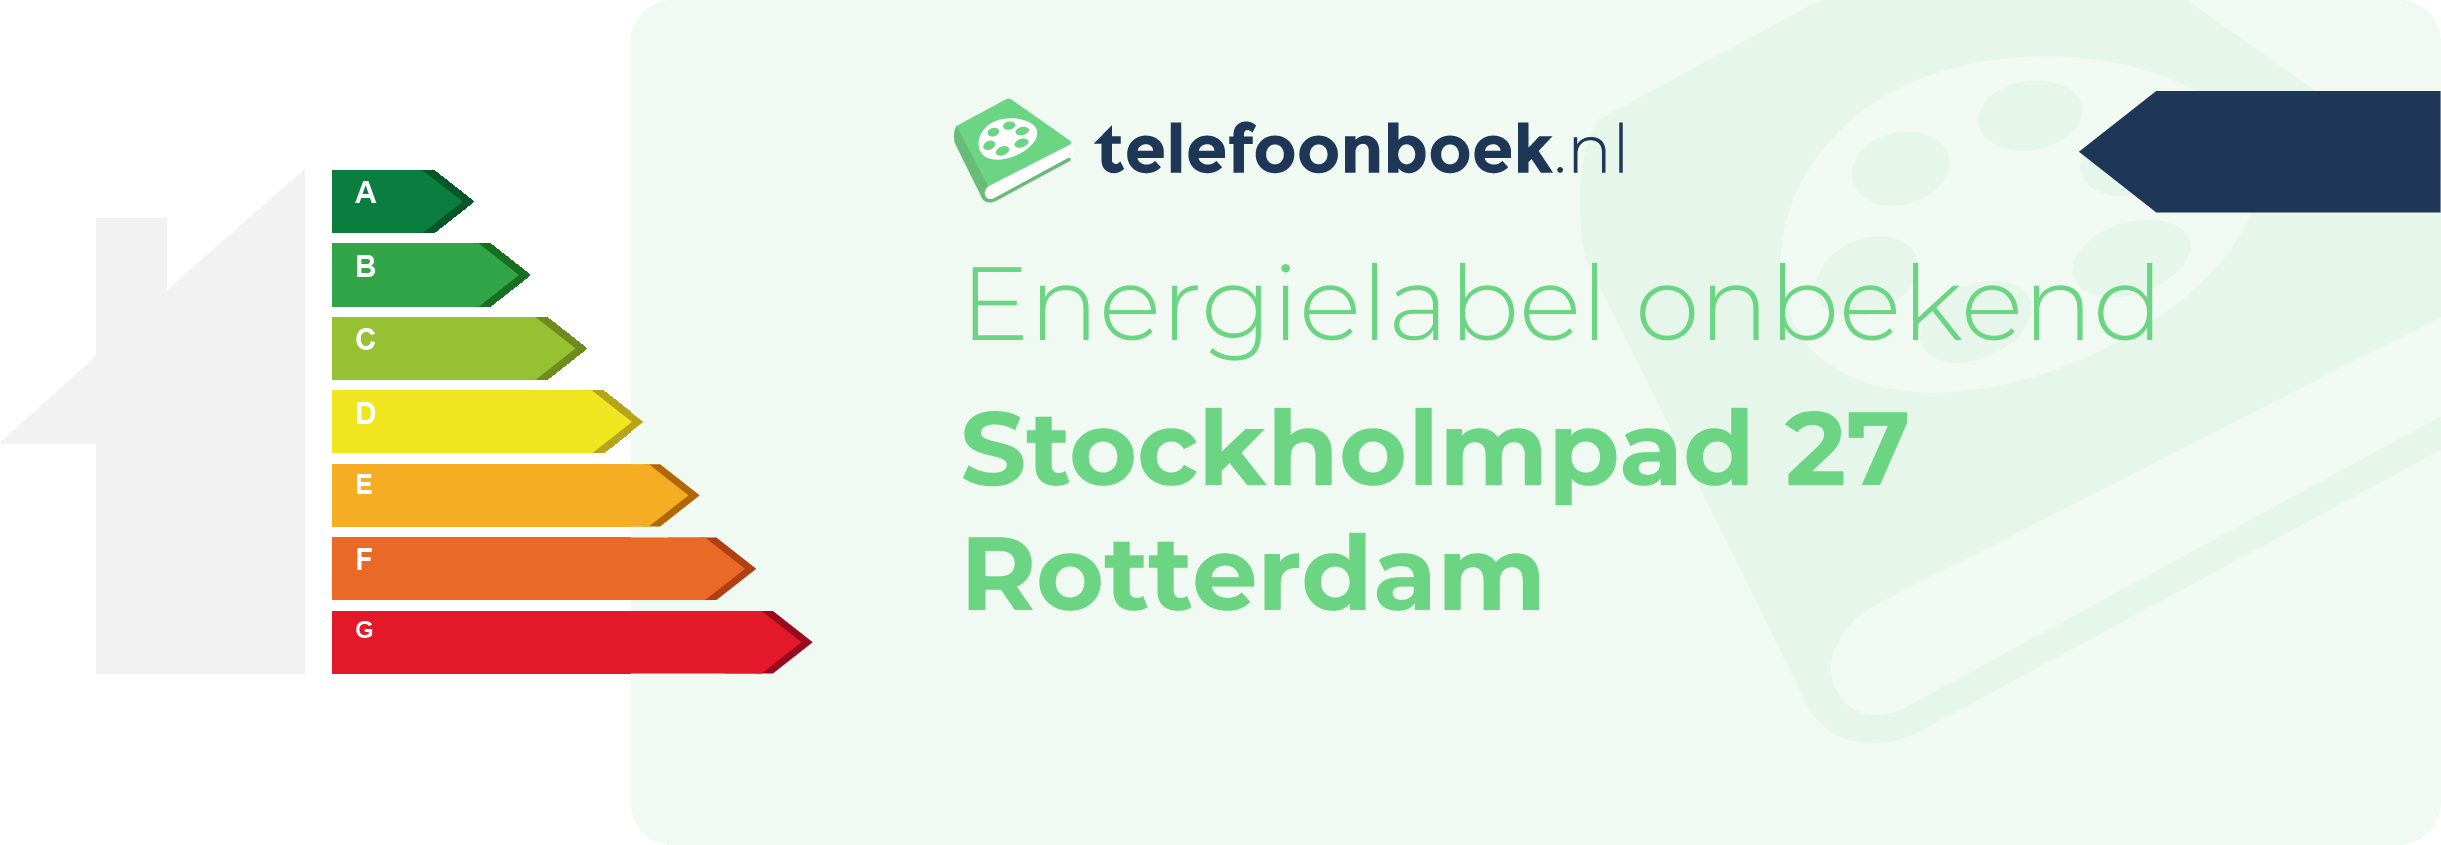 Energielabel Stockholmpad 27 Rotterdam